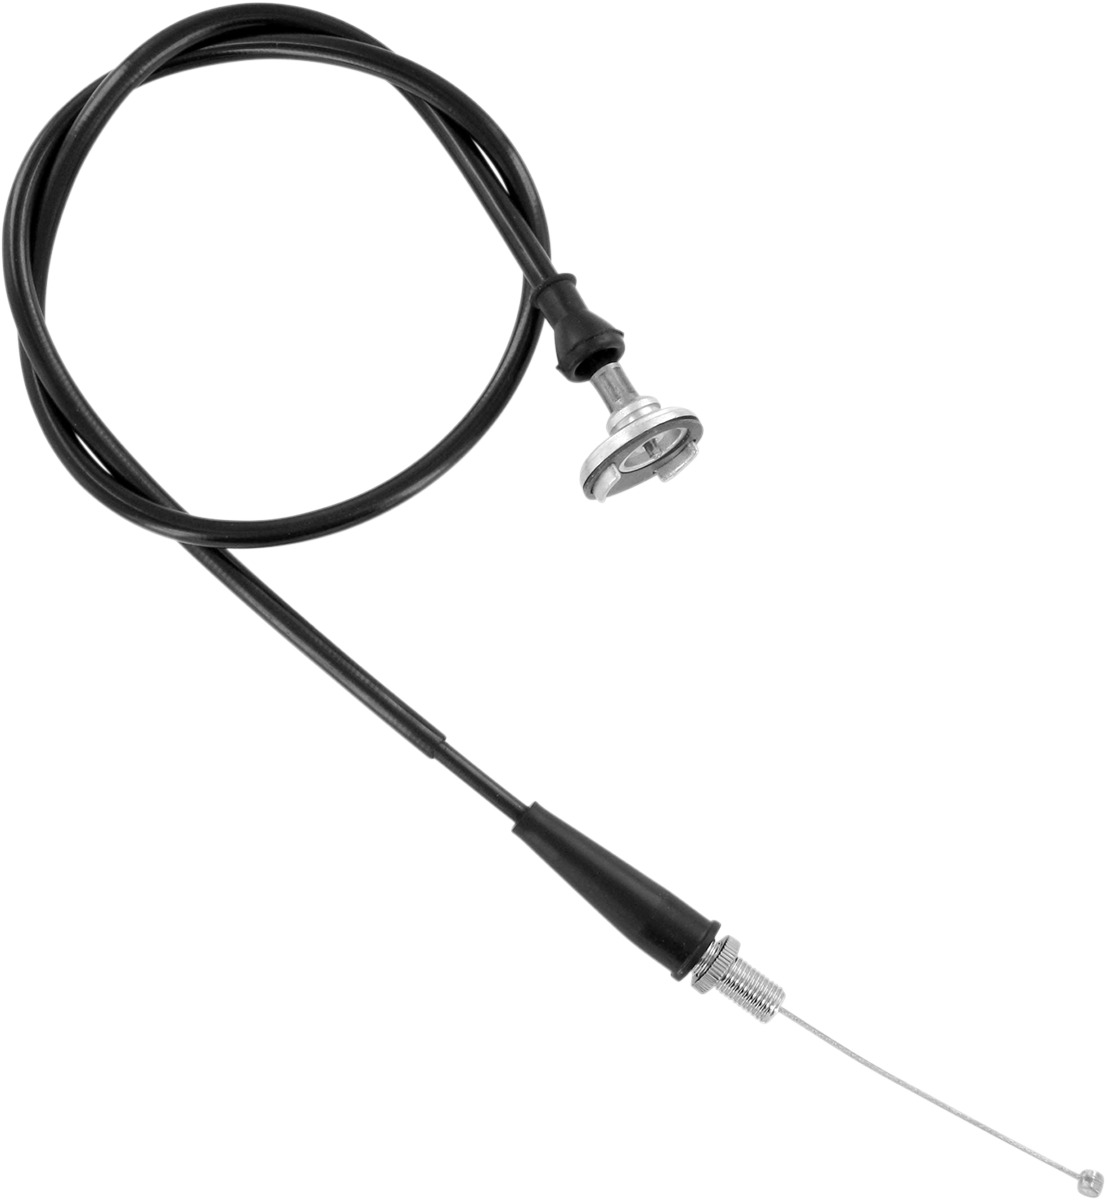 Black Vinyl Throttle Cable - Honda CRF80F XR80R - Click Image to Close